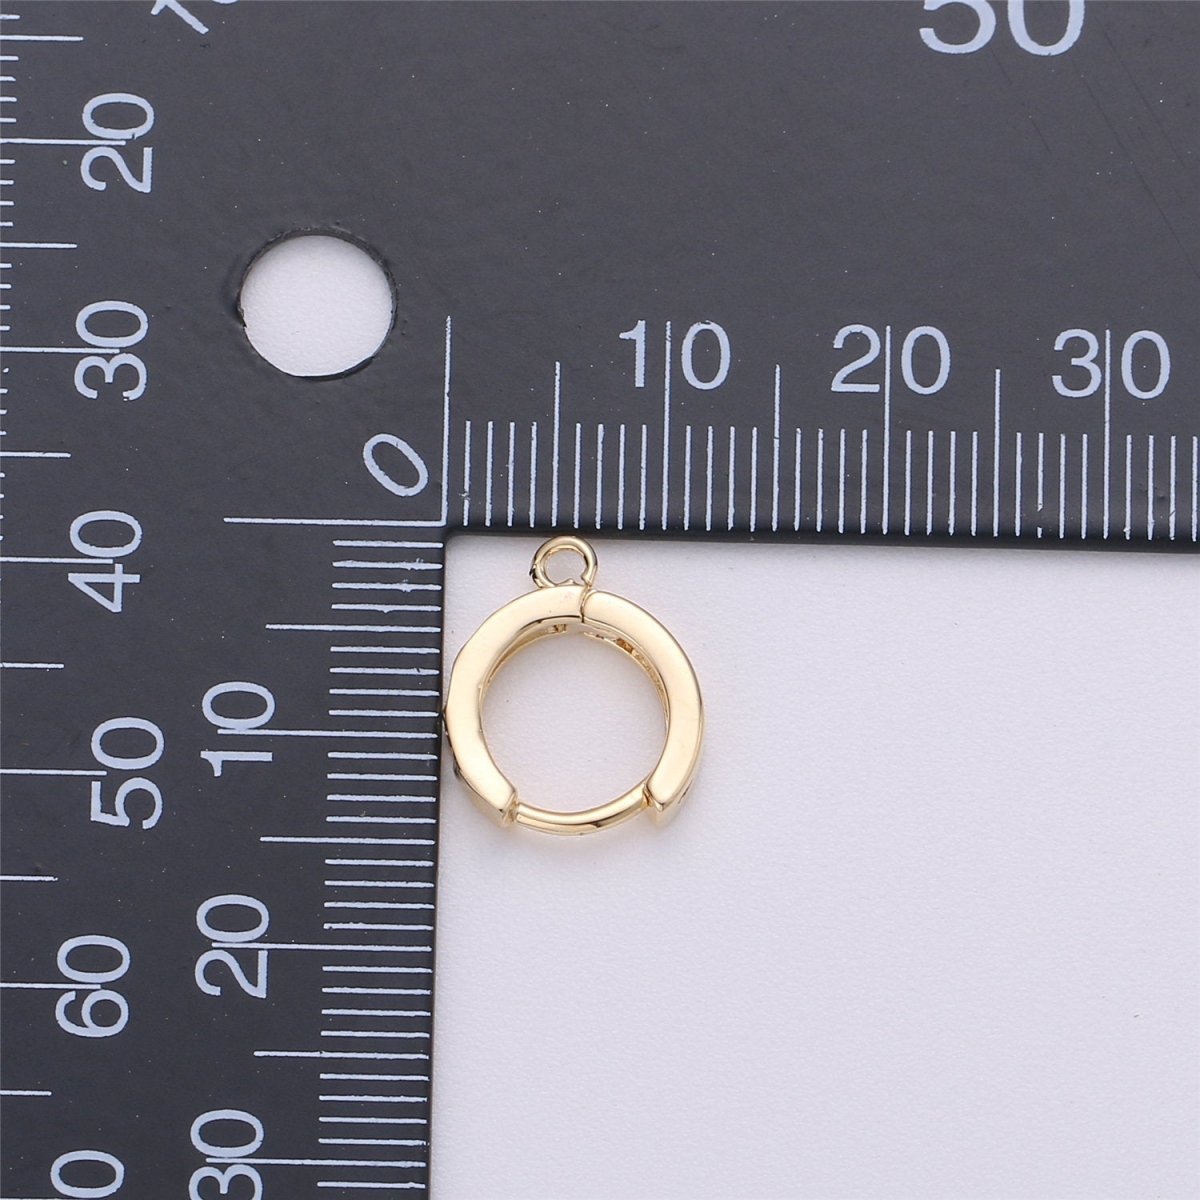 18k Gold Filled one touch w/ open link Lever back earring making, 12x15 mm, Nickel free Lead Free for Earring Charm Making Findings K-054 K-070 K-106 - DLUXCA